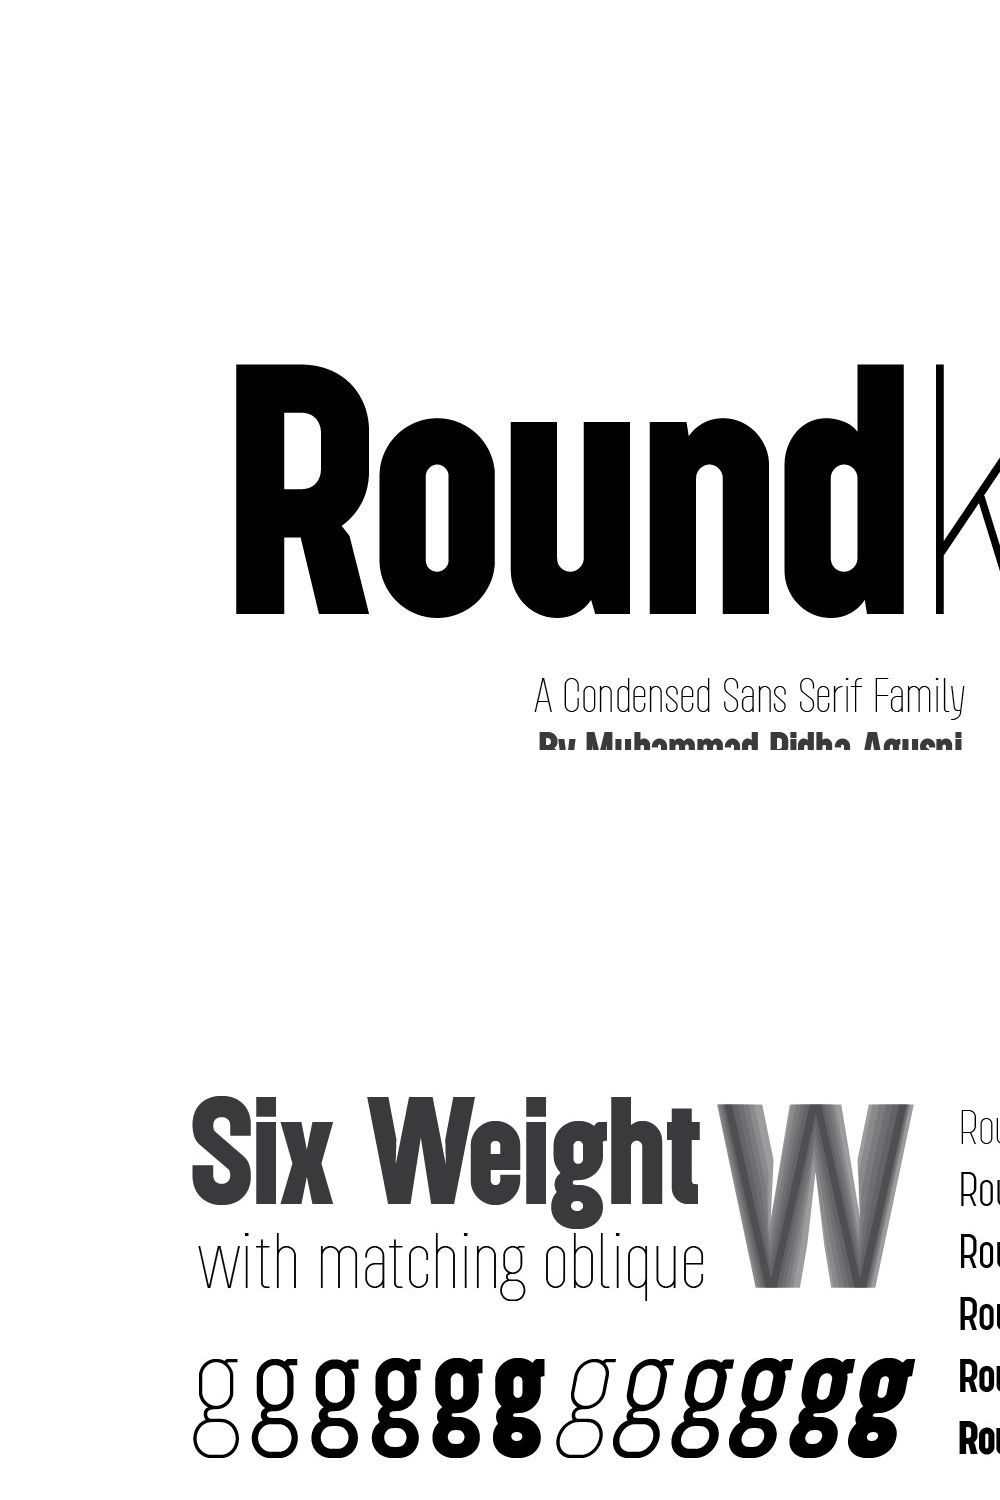 Rounkey Condensed Sans Serif Family pinterest preview image.